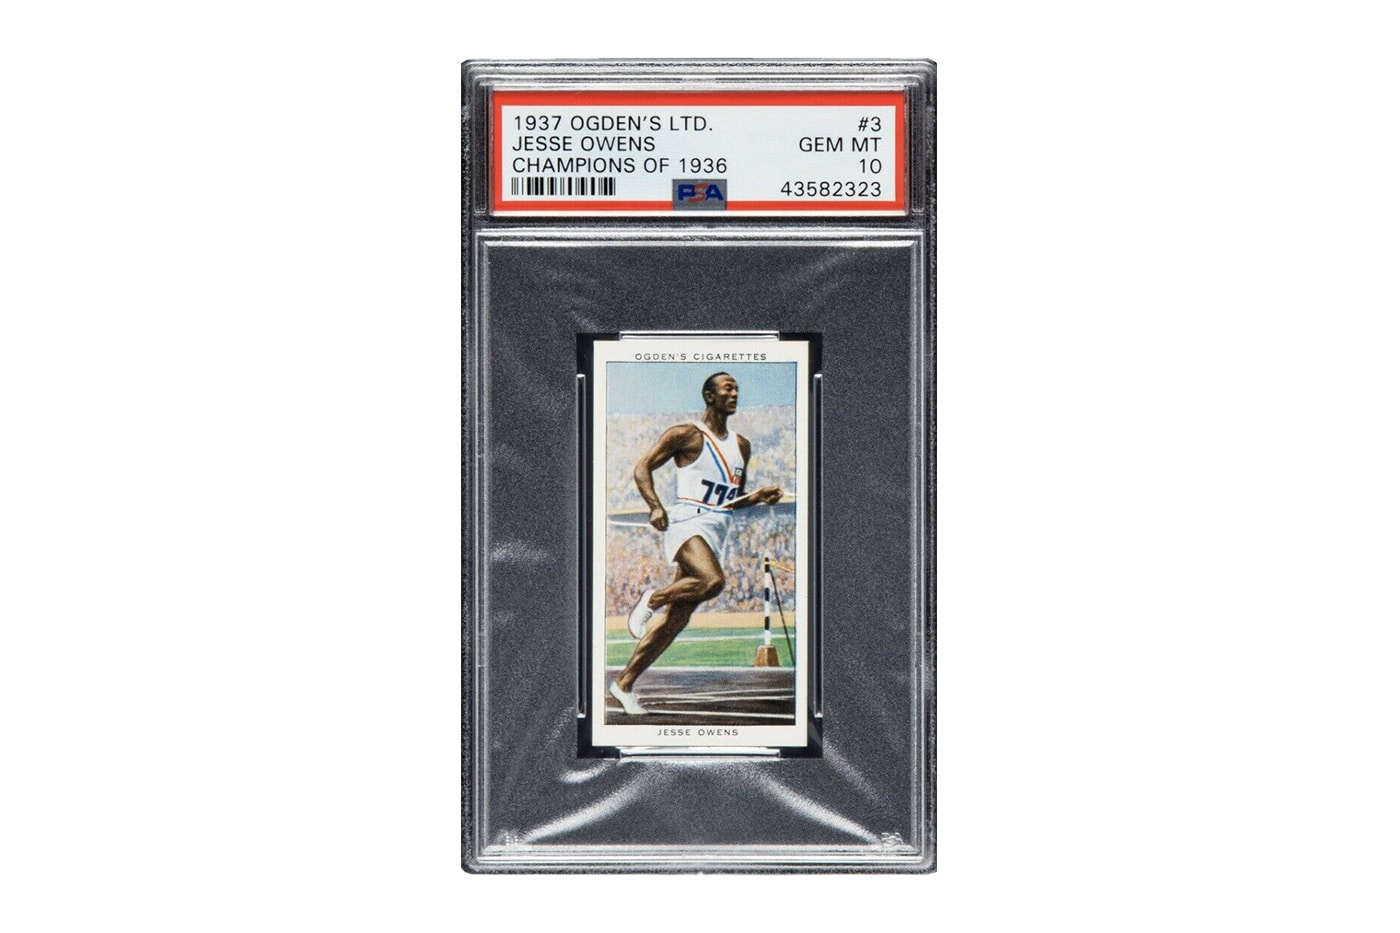 Jesse Owens $380K USD eBay Card Sale nazi regime WWII adolf Hitler USA Olympic Hold Ogden's Cards sports 